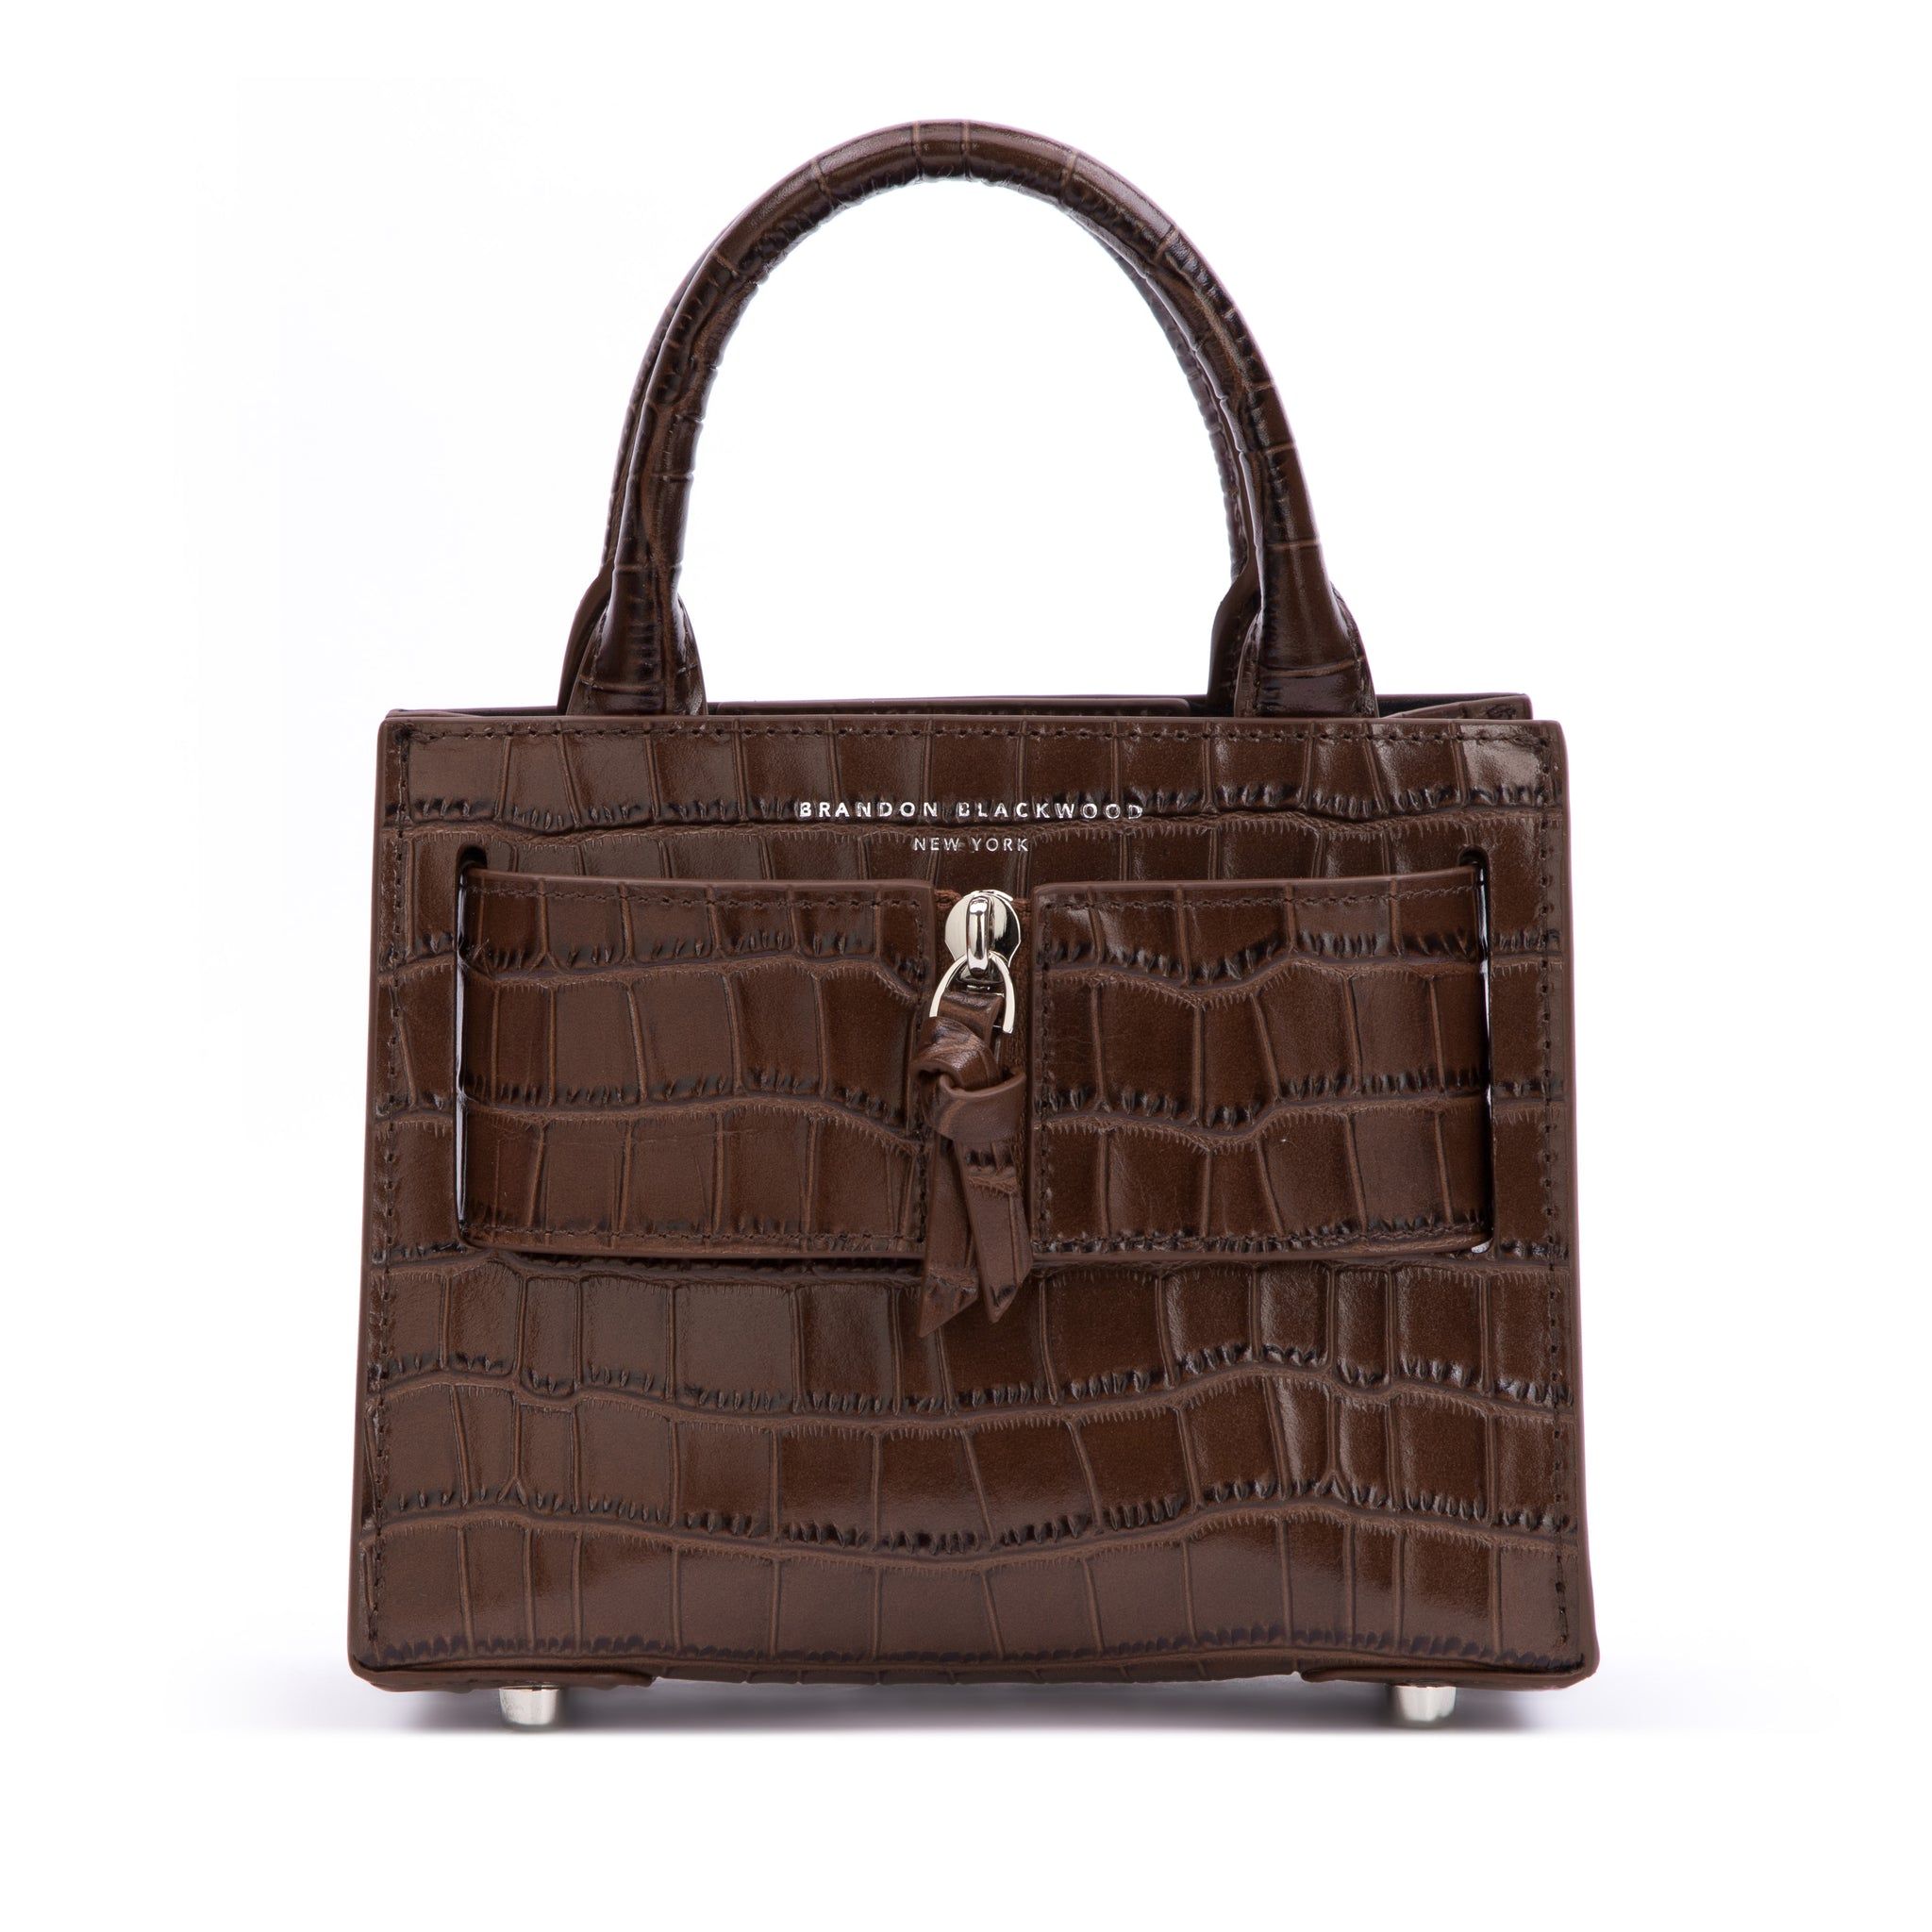 Kuei Bag in Chocolate Brown Croc Embossed Leather